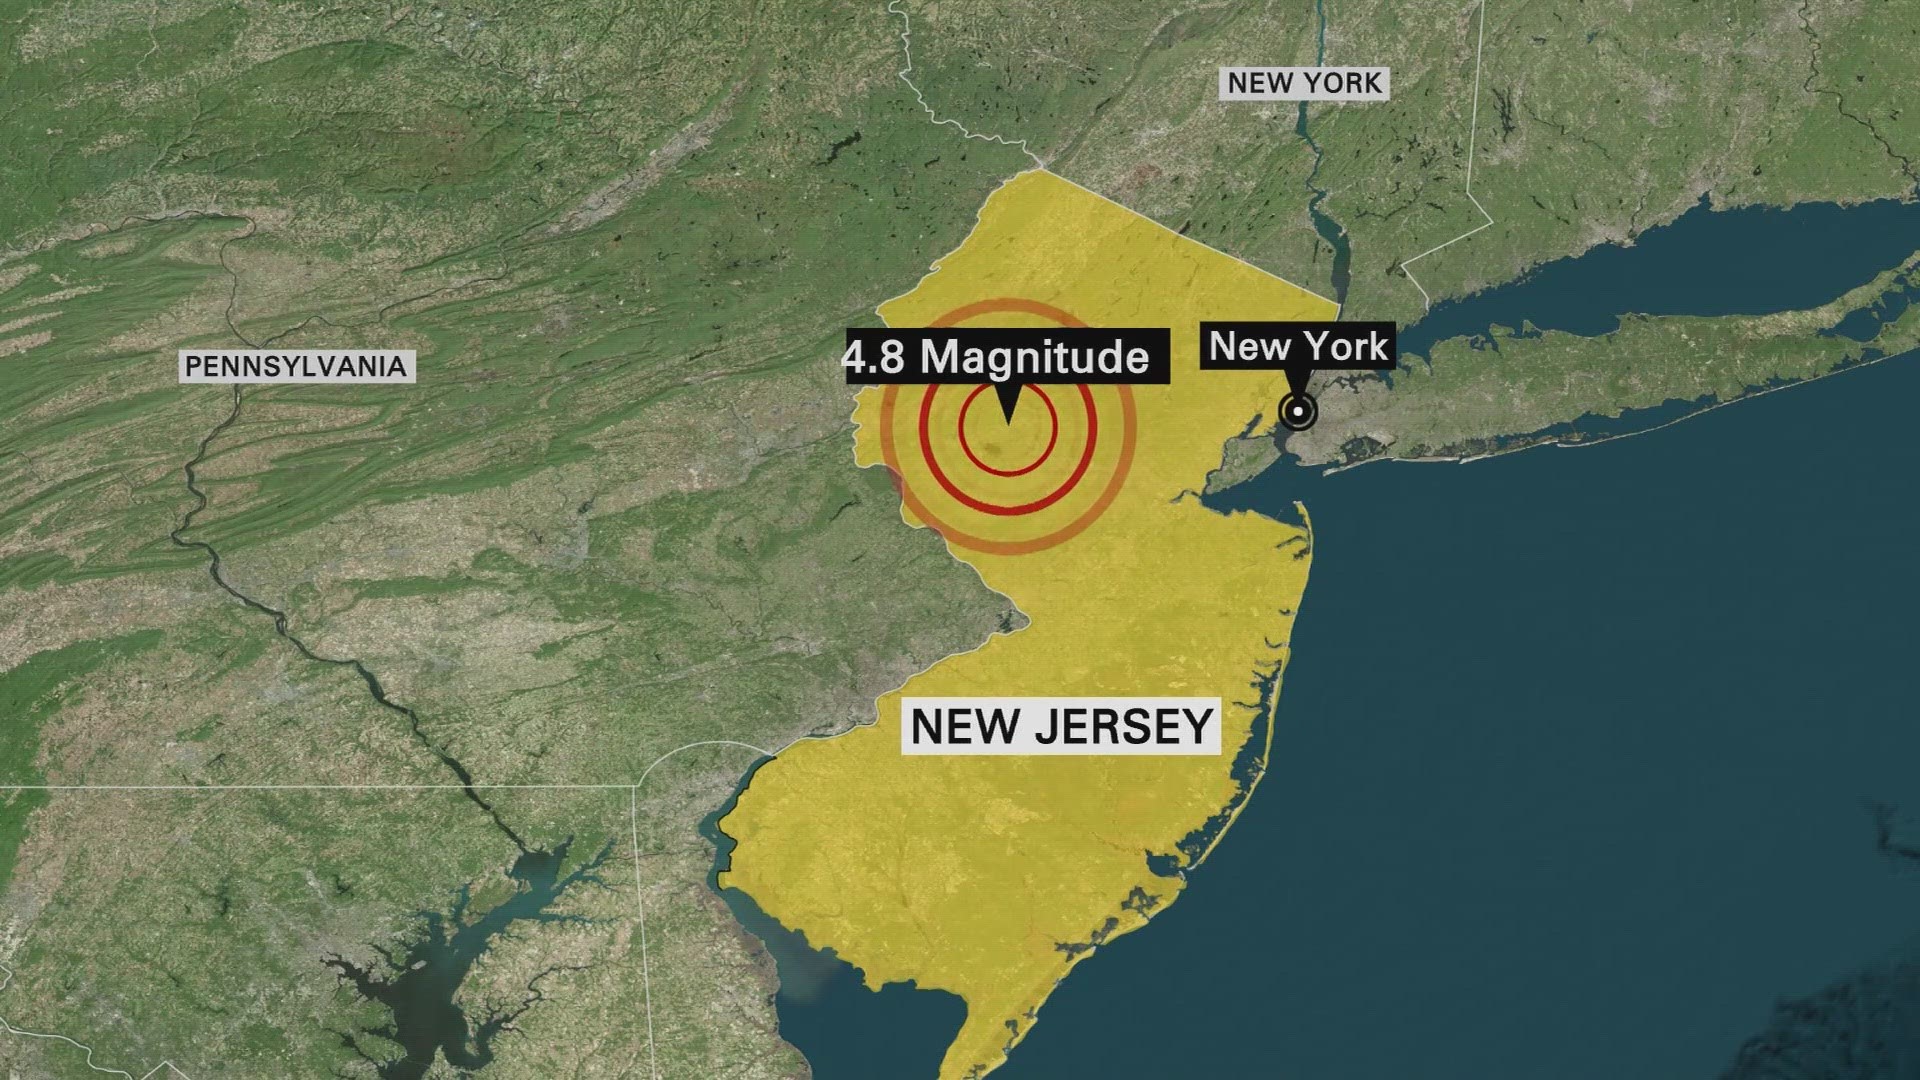 Earthquake shakes New York, East Coast region